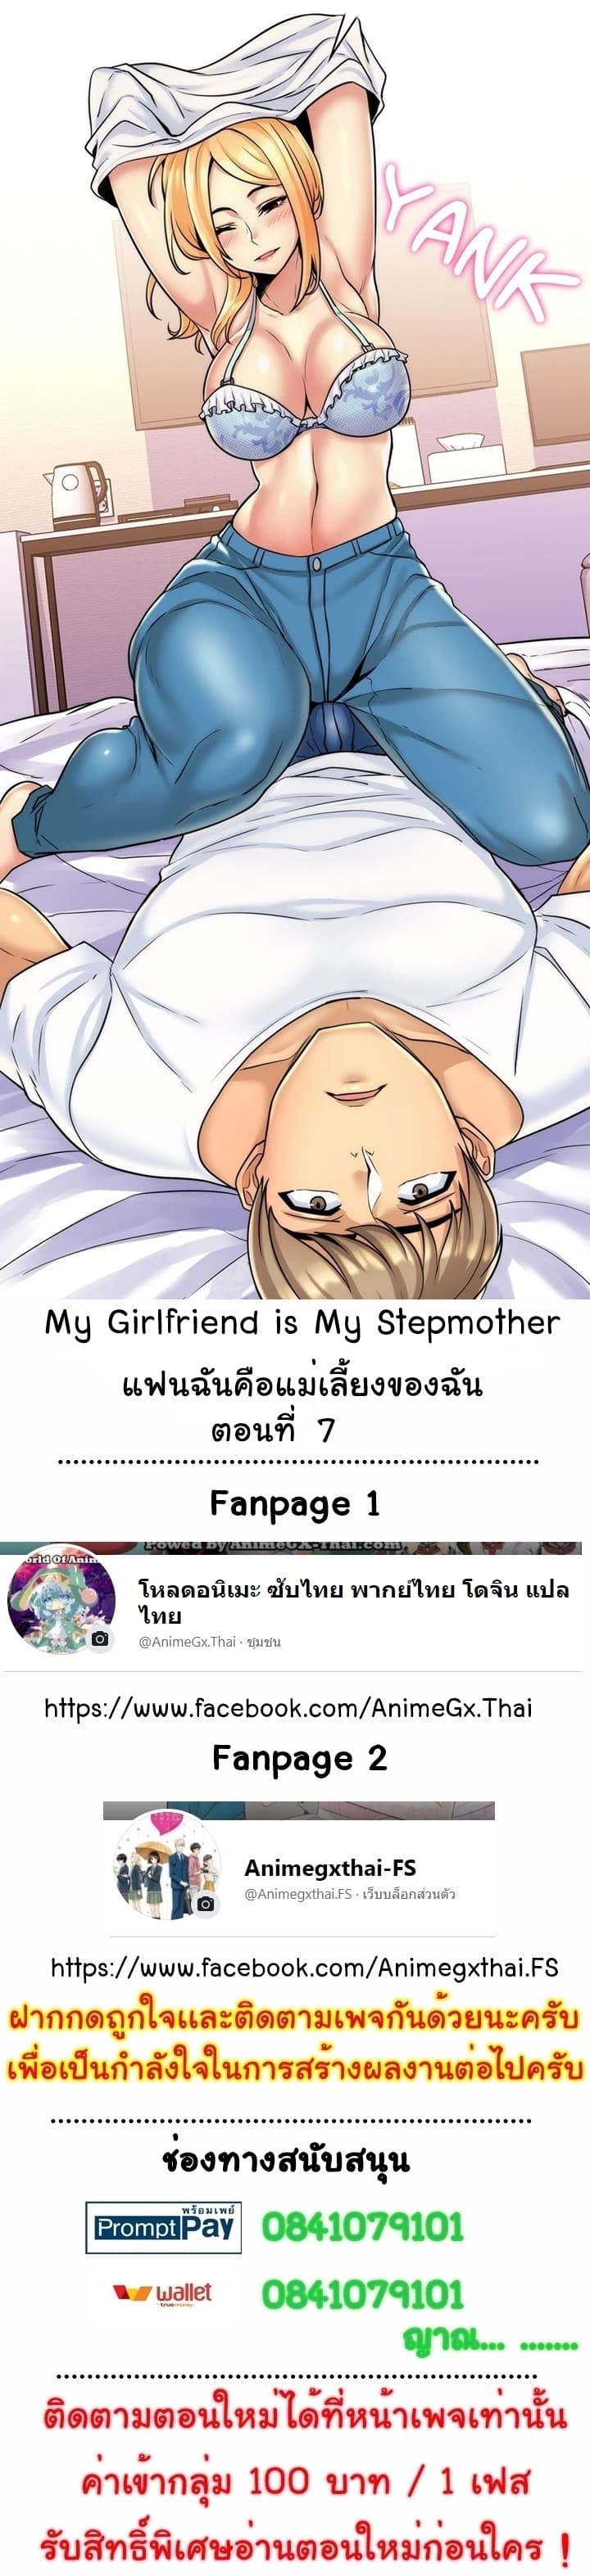 My Girlfriend is My Stepmother 7 01